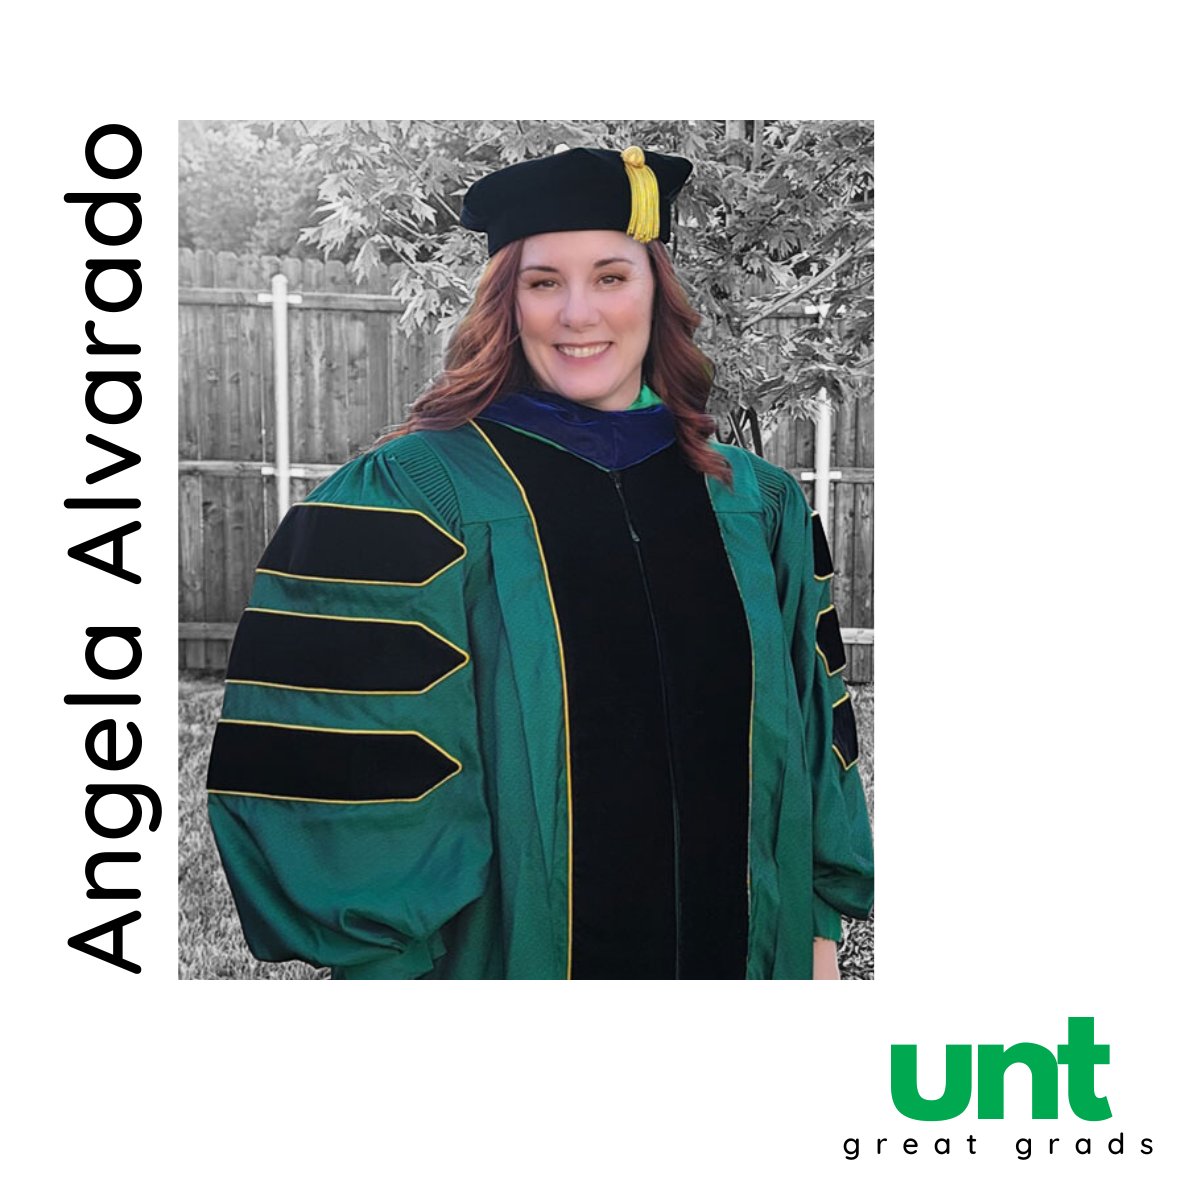 Angela Alvarado graduates with a Ph.D. in Information Science this week. Learn what makes Angela a #UNTgreatGrad ci.unt.edu/great-grads

#UNTCOI #UNTINFOSCIENCE #UNTIS #UNT #iSchool #UNT23 #HealthInformatics #Gentiva #InformationScience